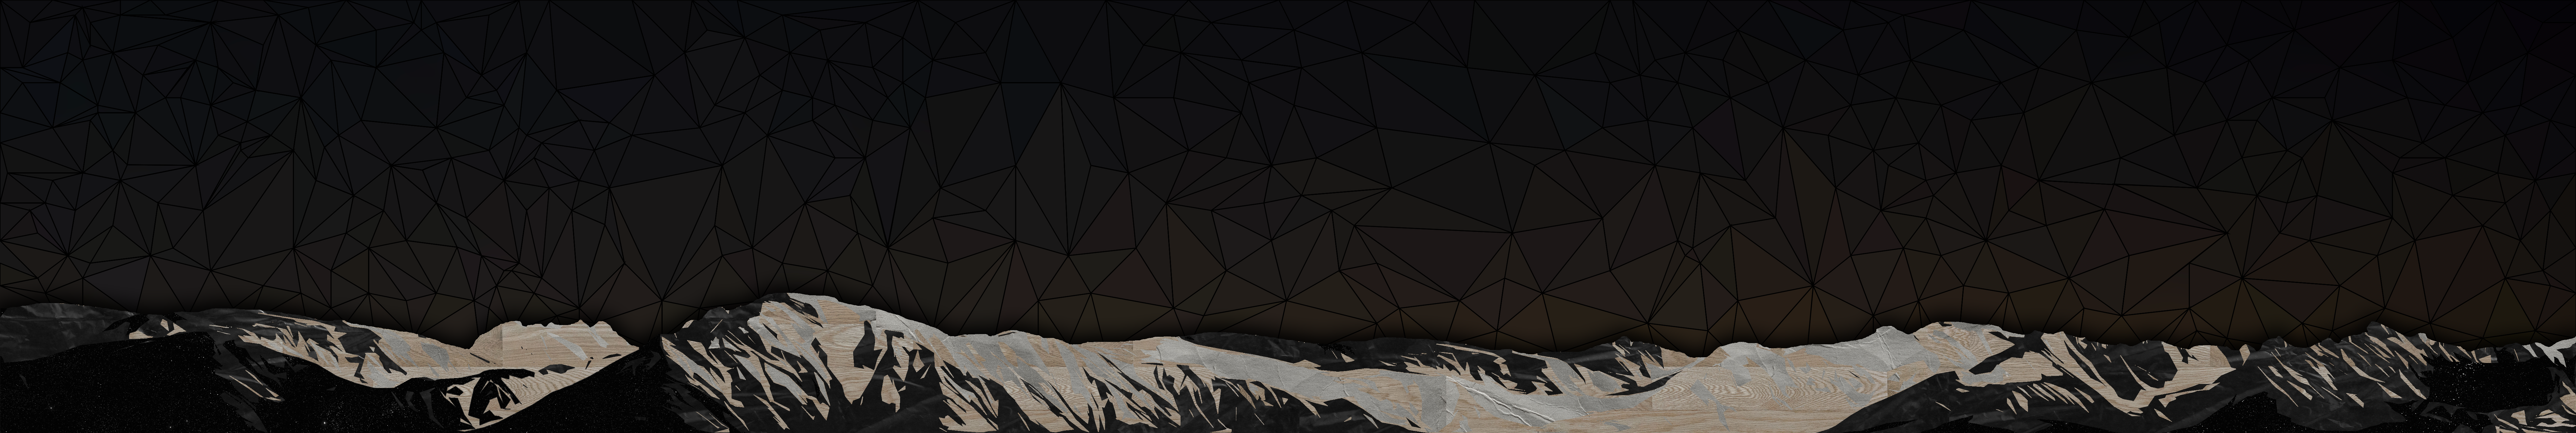 Minimalism Digital Art Geometric Figures Geometry Line Art Low Poly Texture Mountains Ultrawide Trip 8560x1440